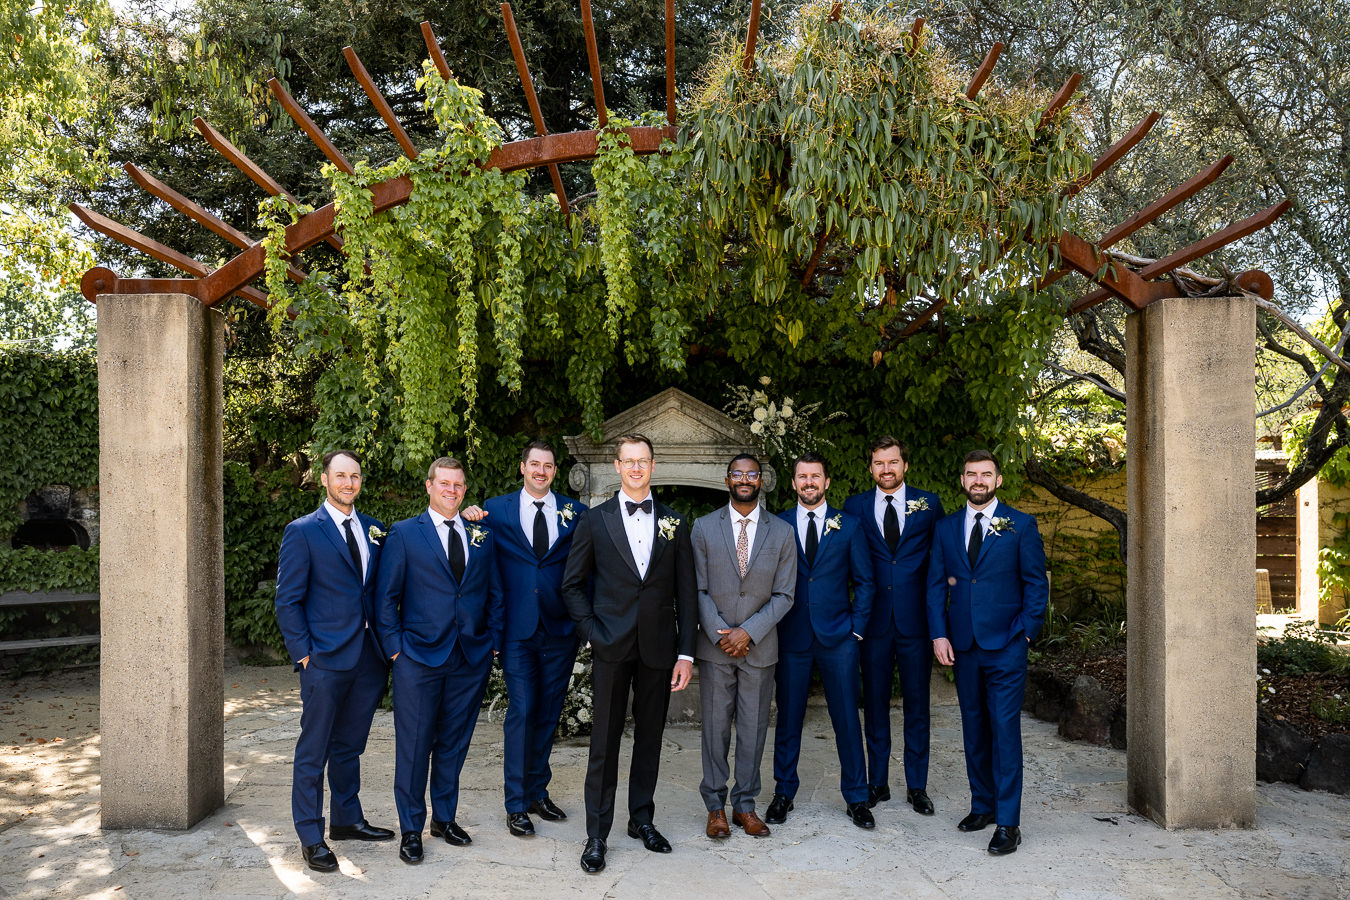 Seven Branches Wedding Photo